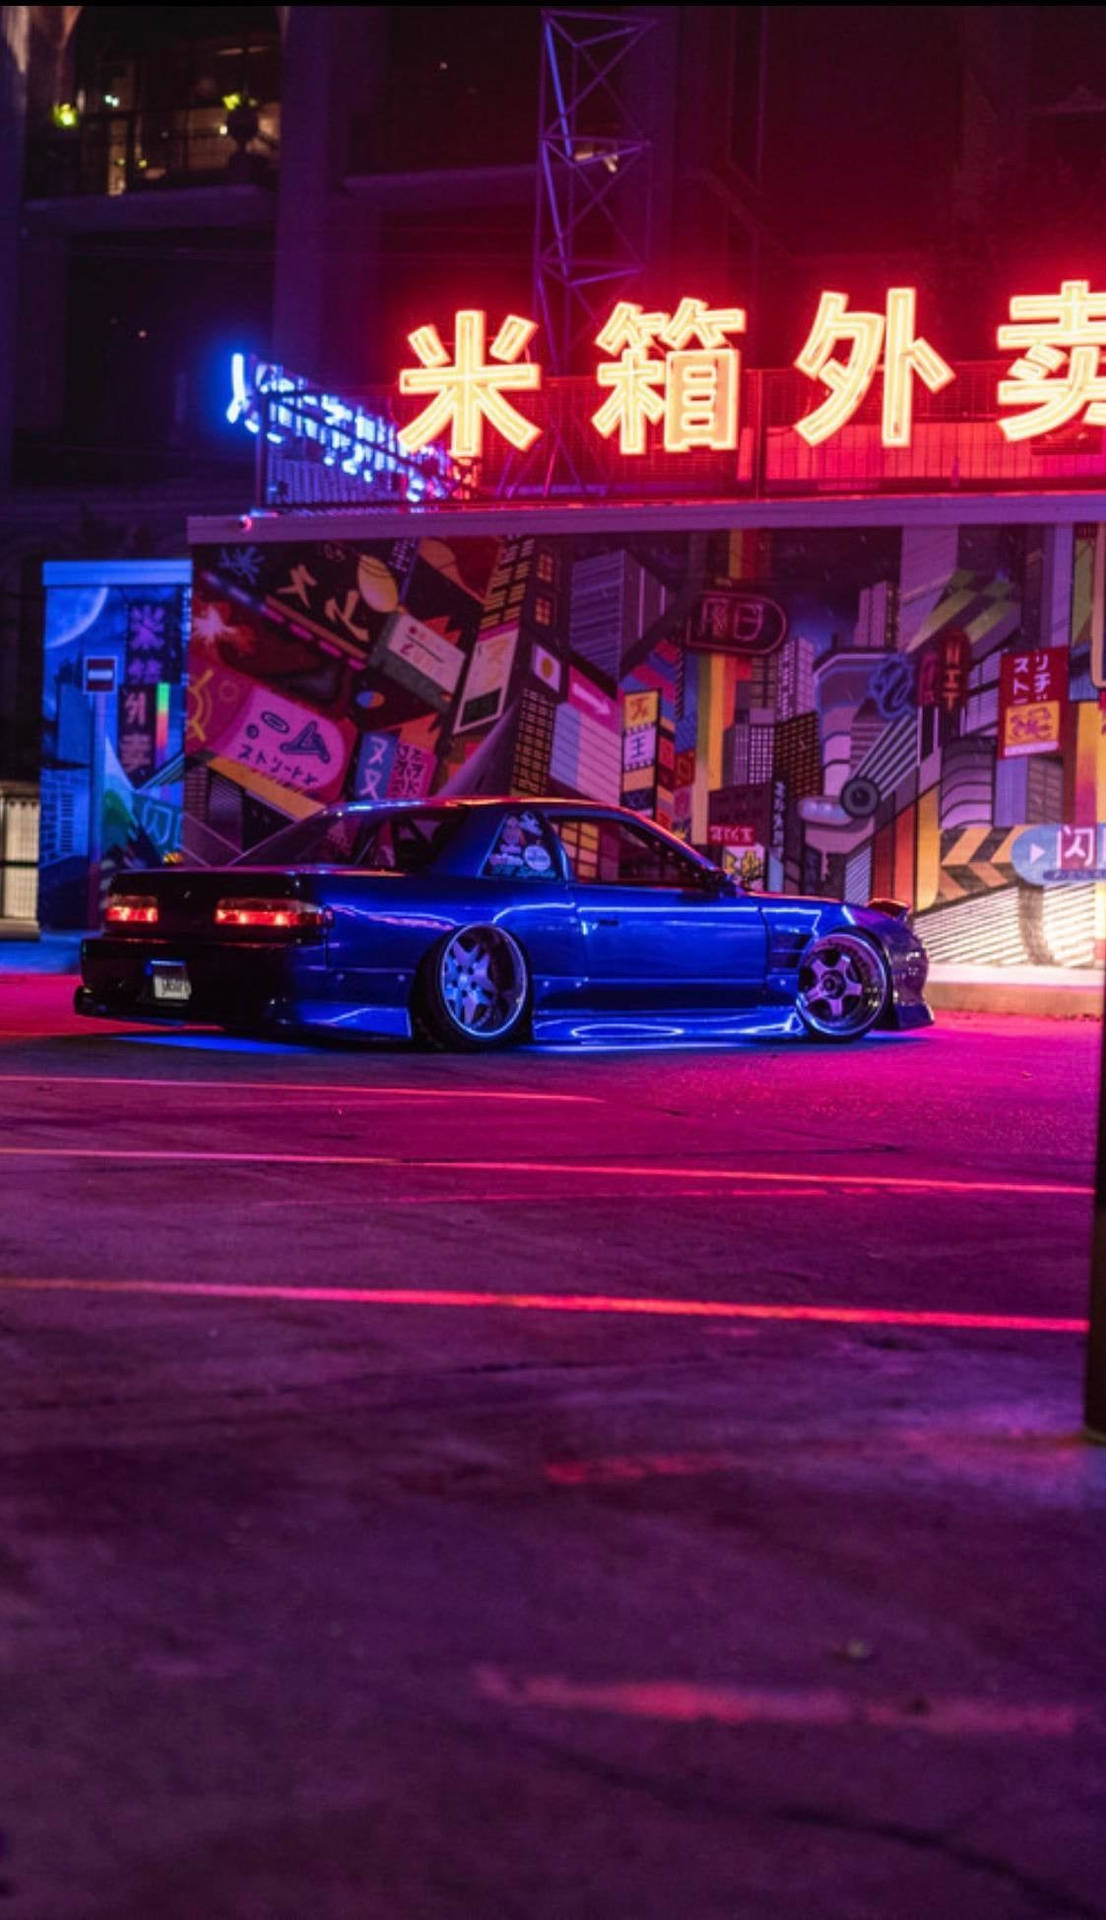 Blue Jdm Car With Neon Lights Wallpaper